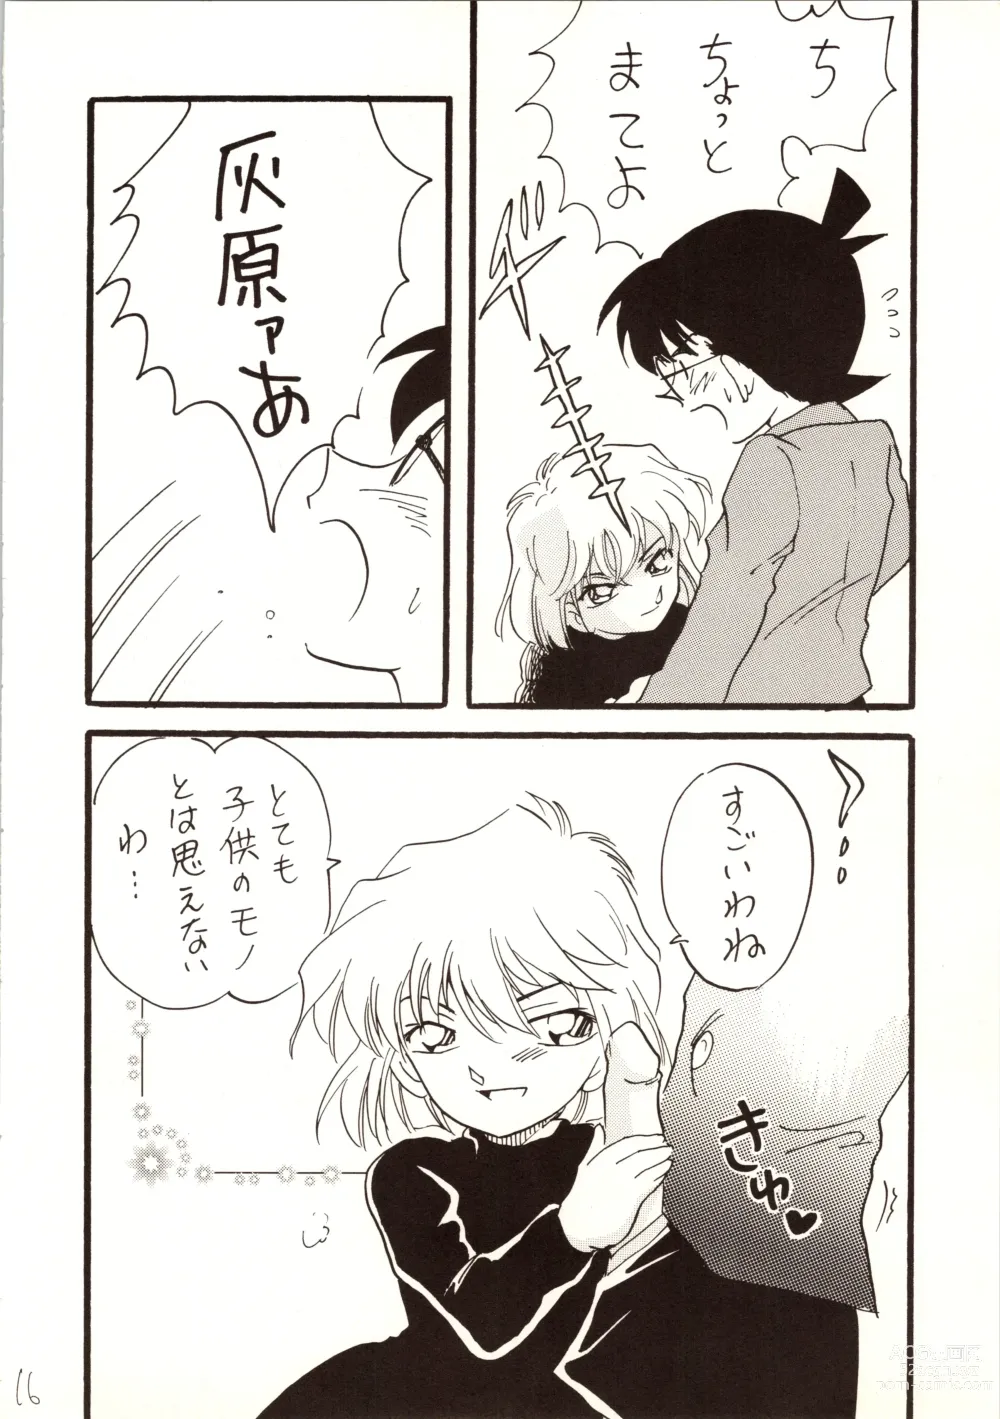 Page 16 of doujinshi Meitantei DX